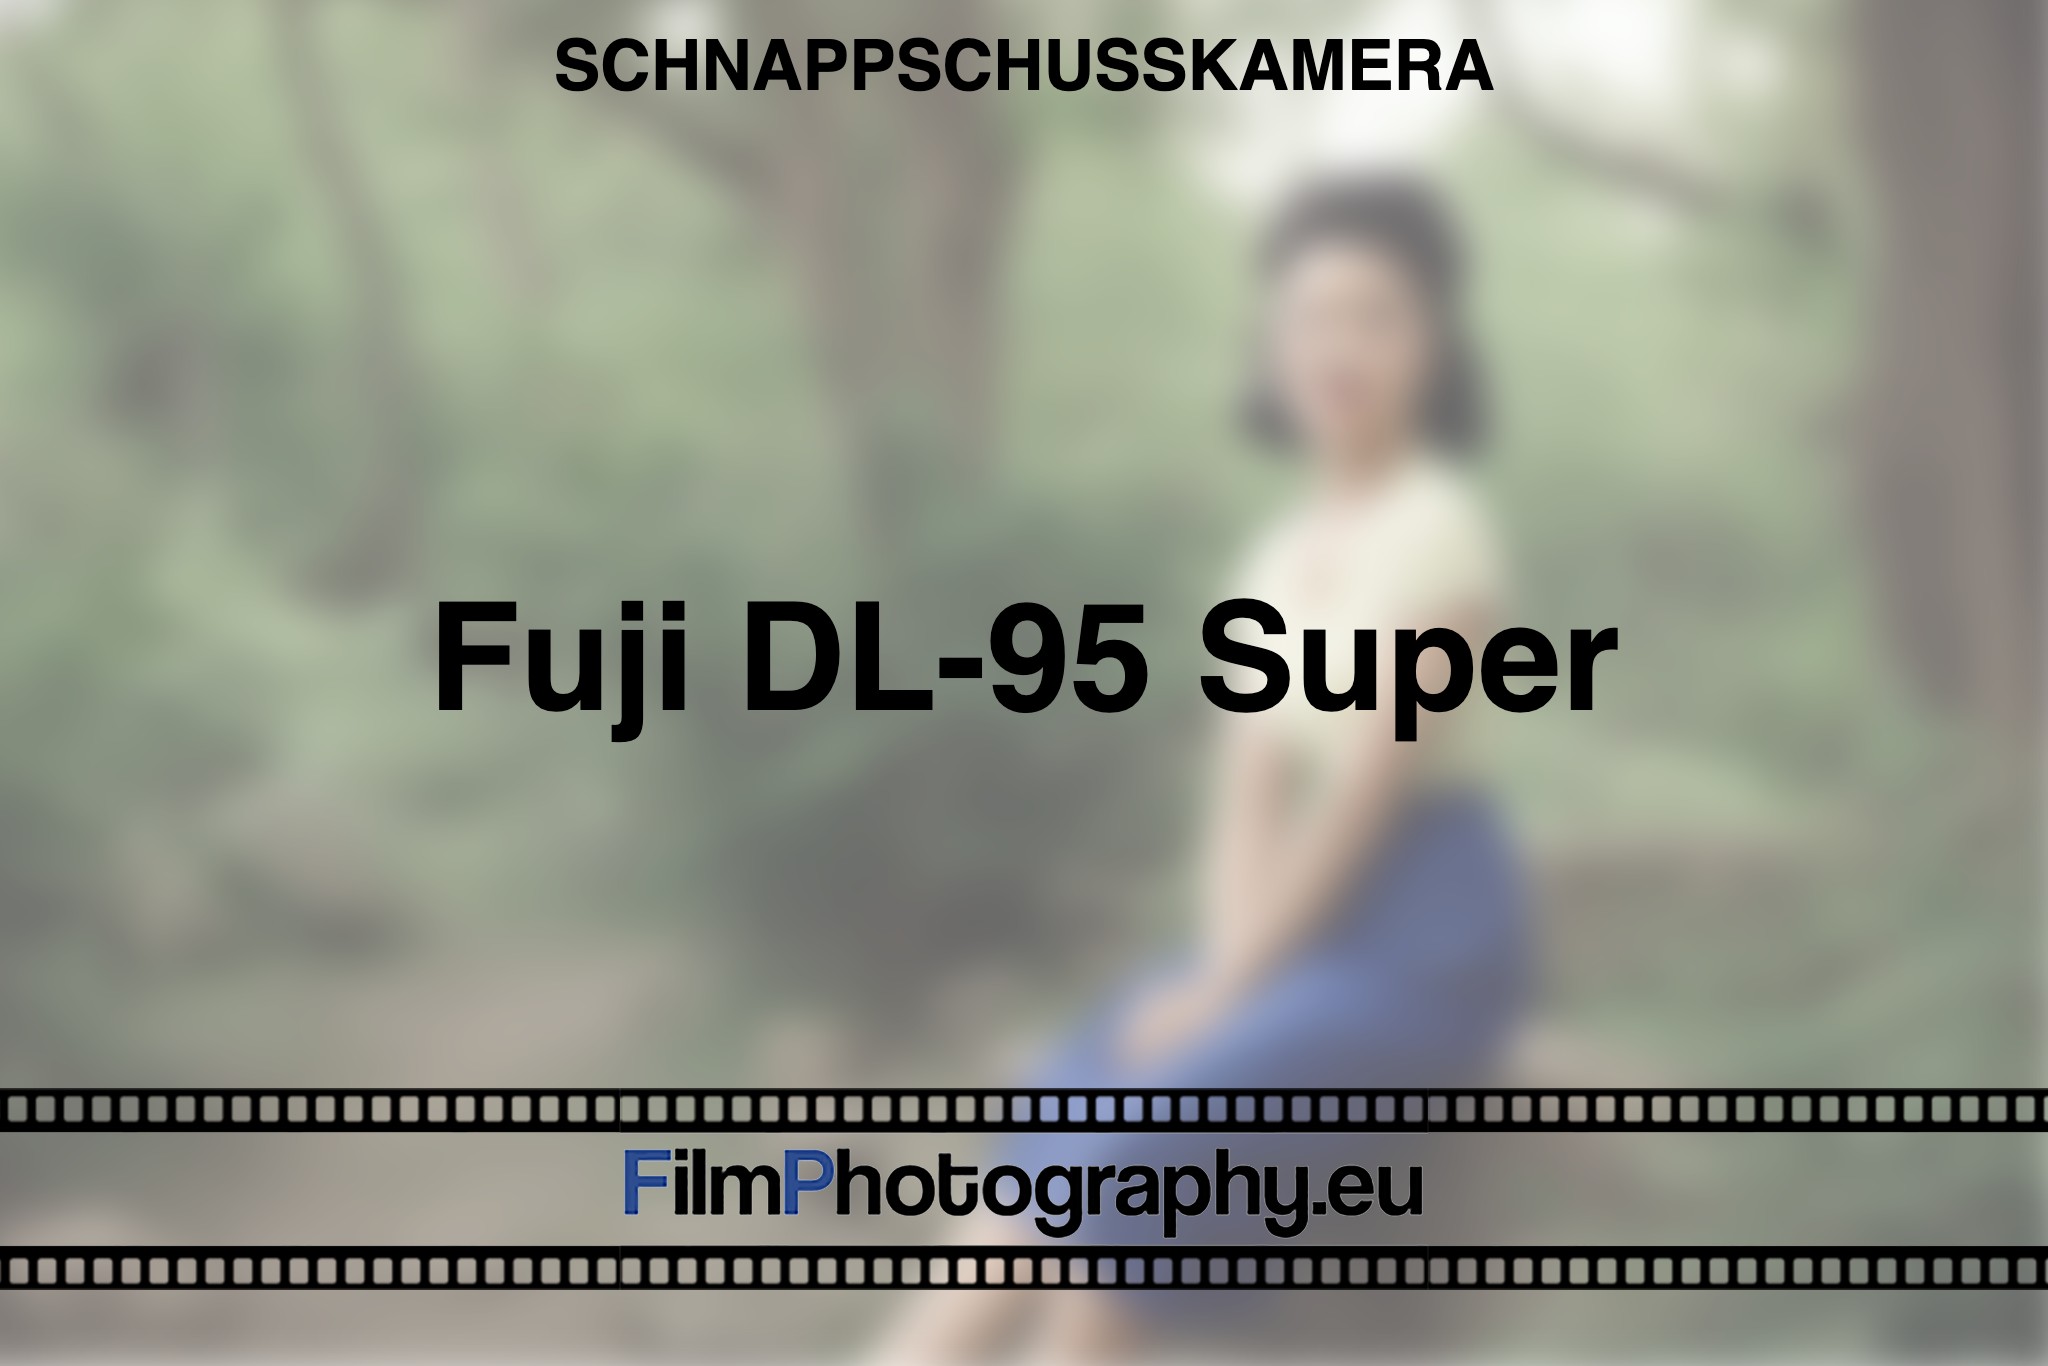 fuji-dl-95-super-schnappschusskamera-bnv